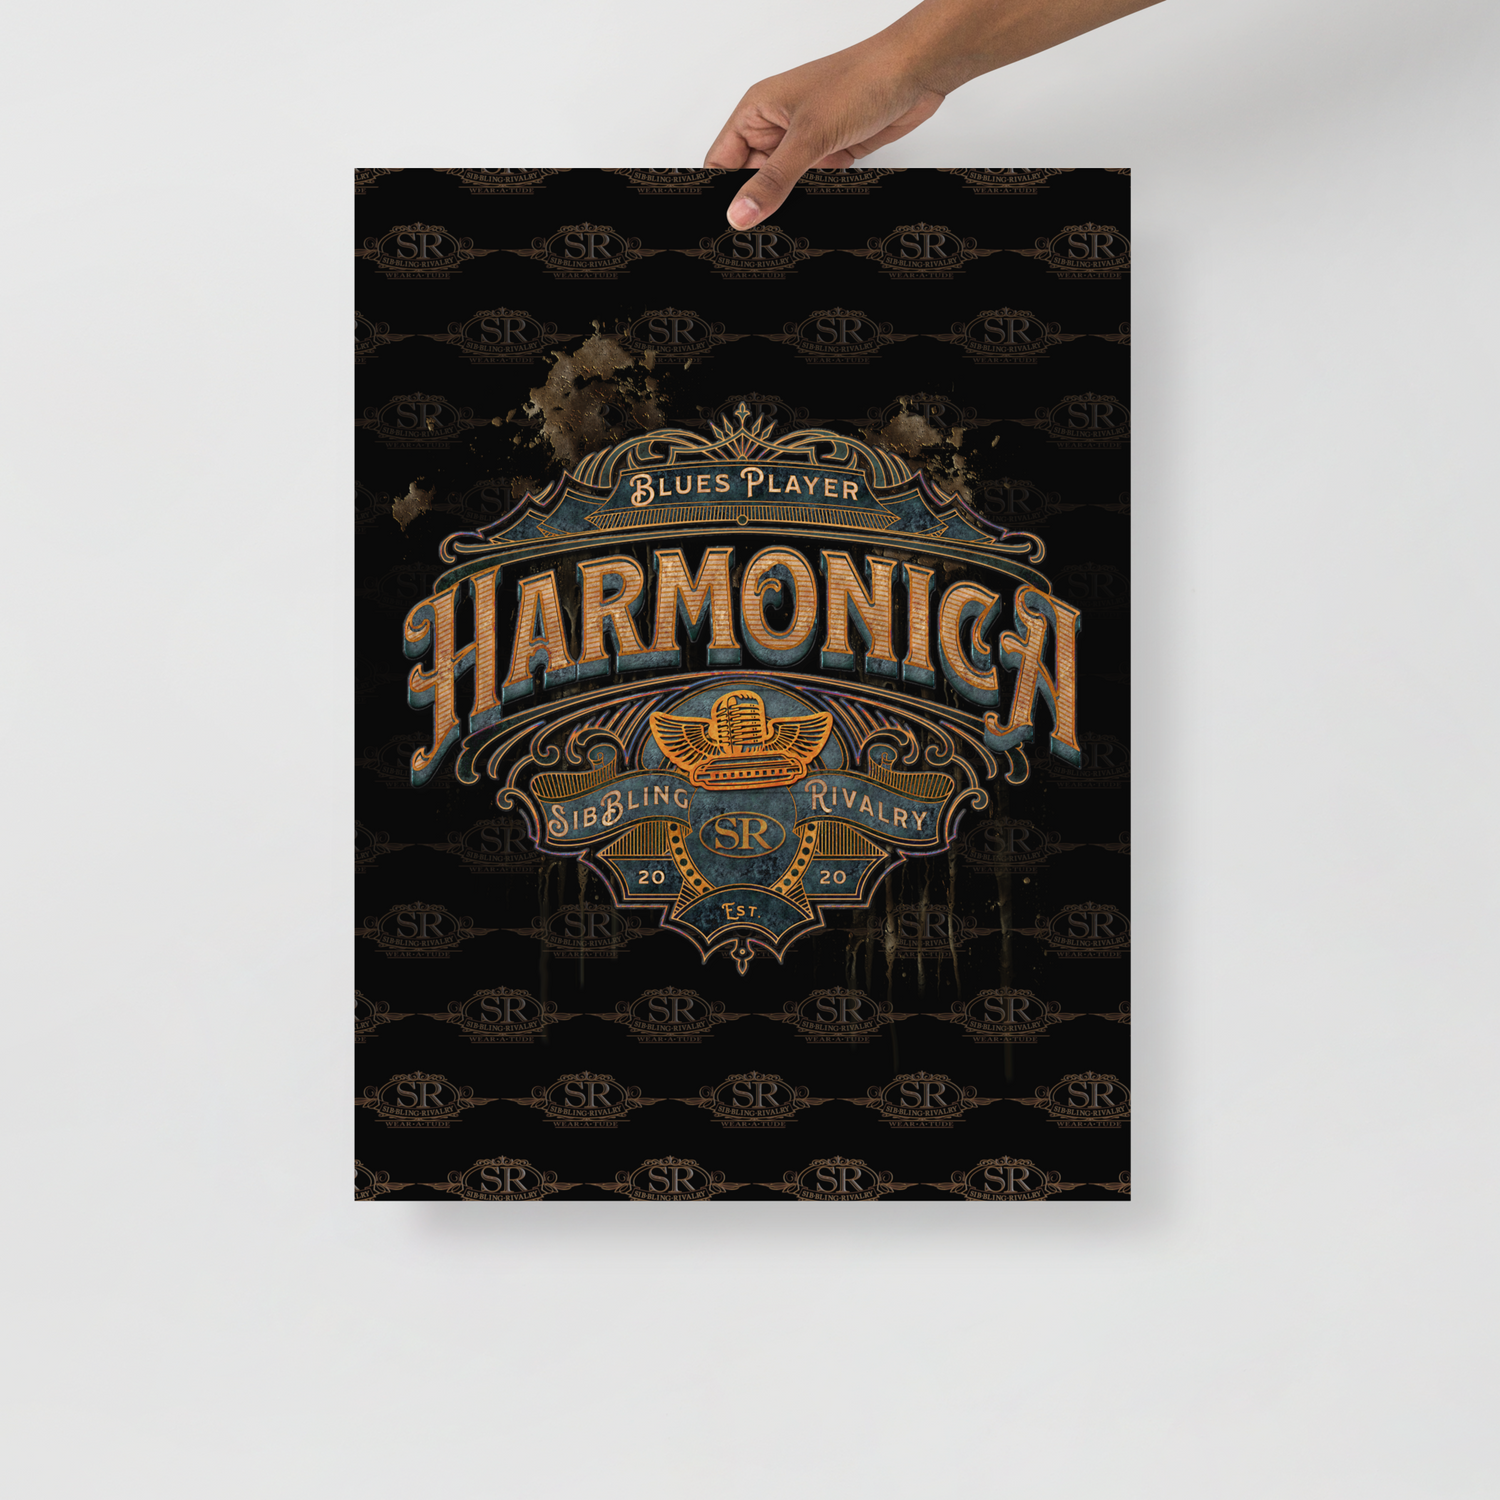 HARMONICA SHEILD ~ SR Harmonica player poster - SIB.BLING RIVALRY